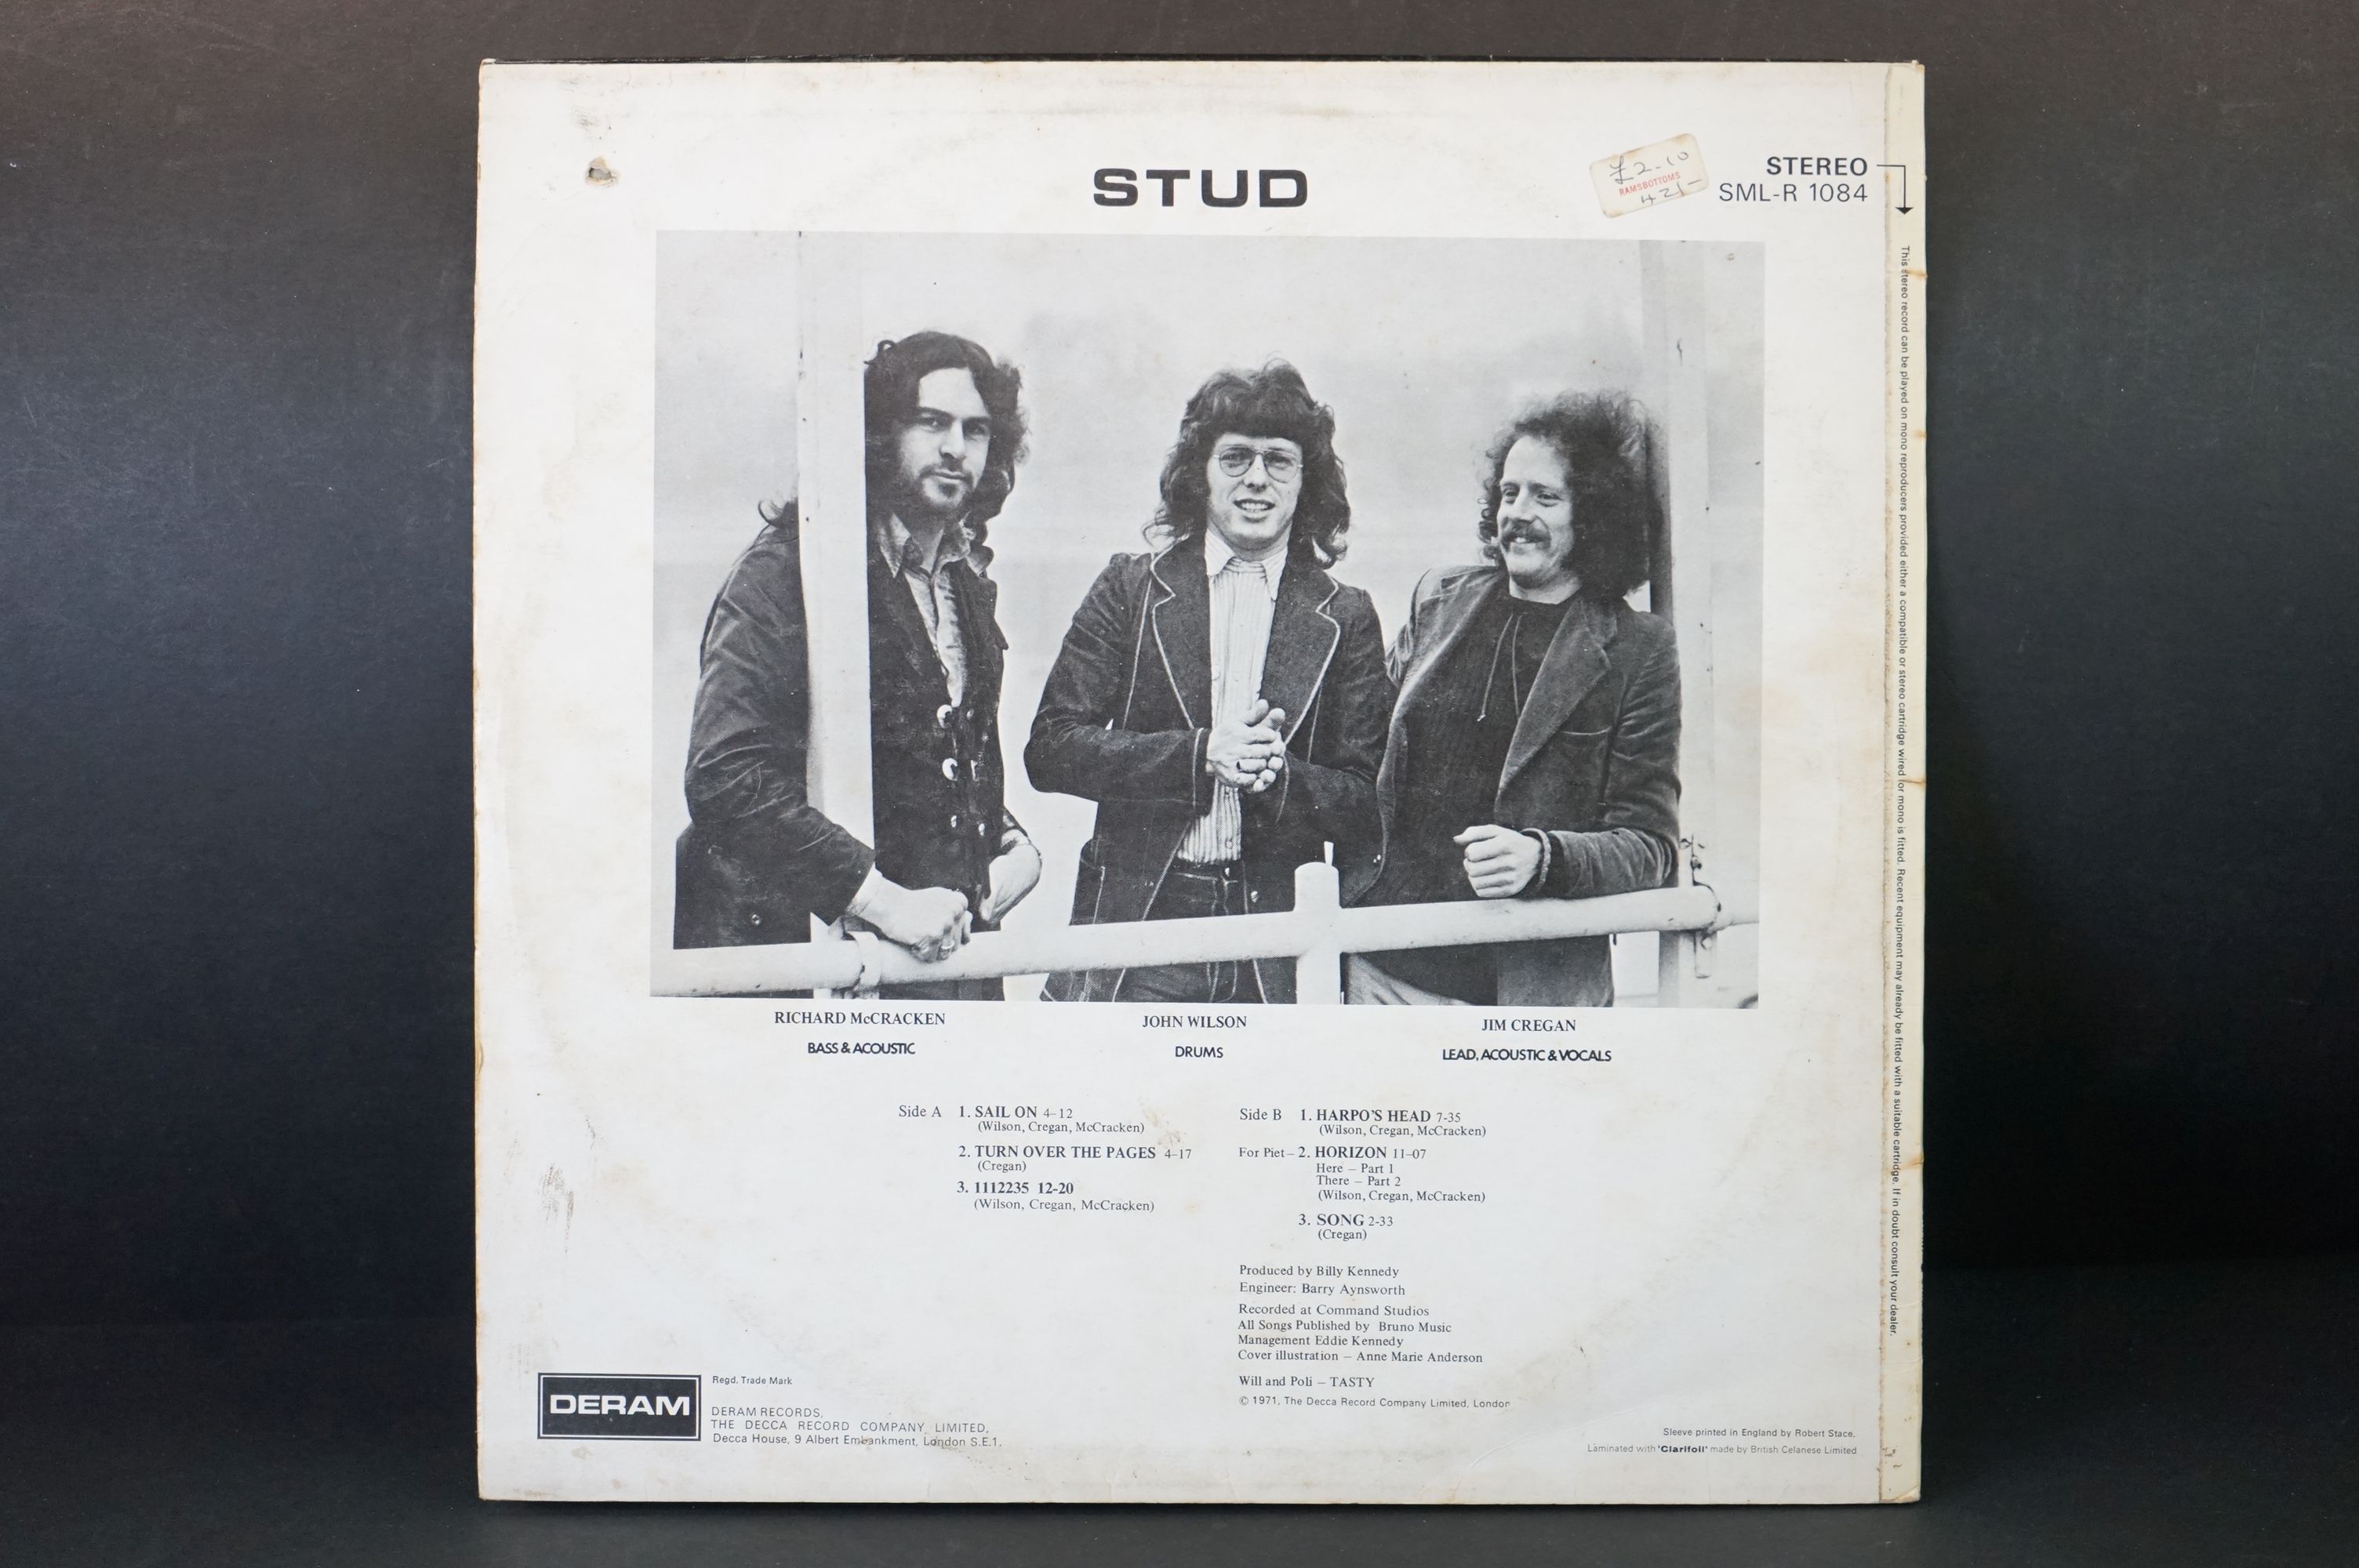 Vinyl - Stud - Stud, original UK 1971 1st pressing, Deram Records SML-R 1084, VG- / VG+ - Image 6 of 6